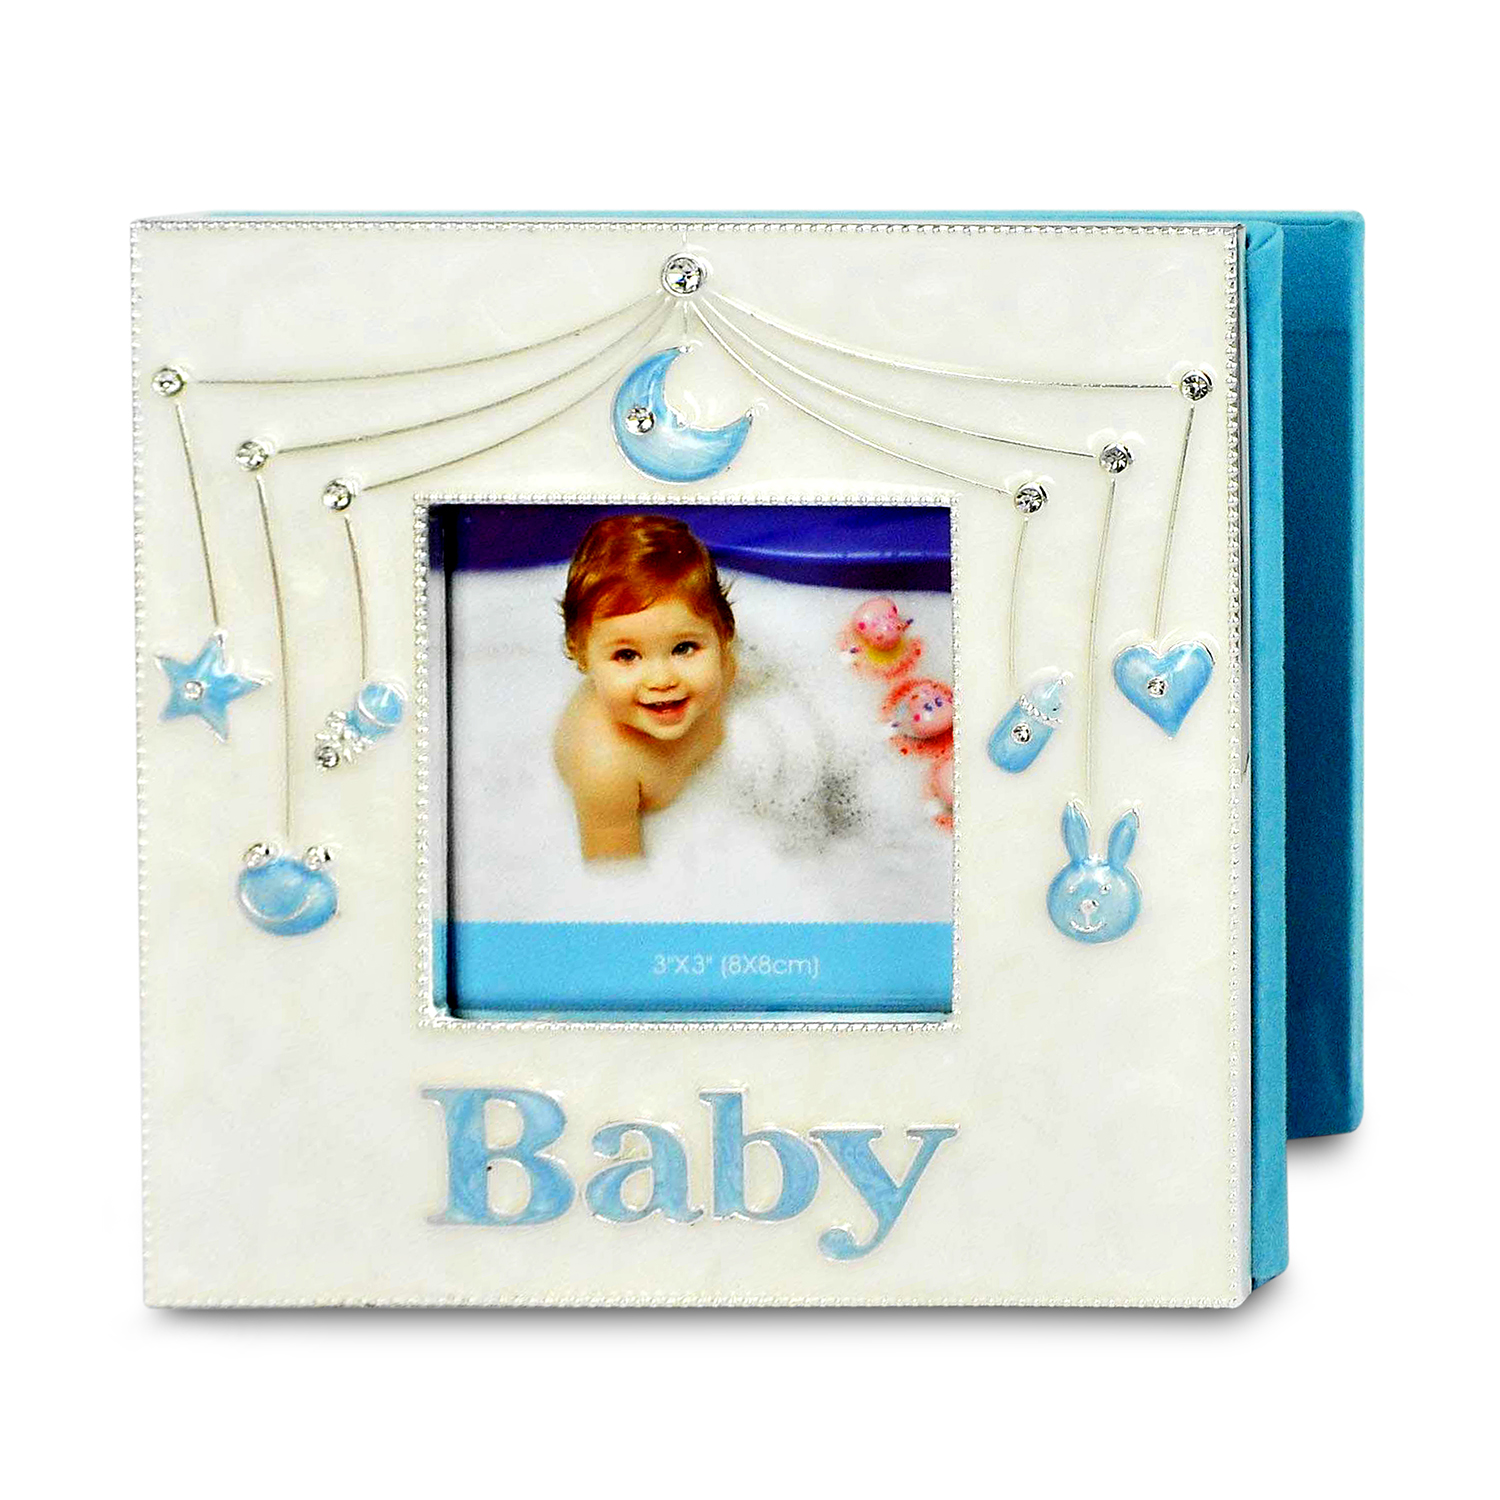 BABY"moon&star" CD collection album